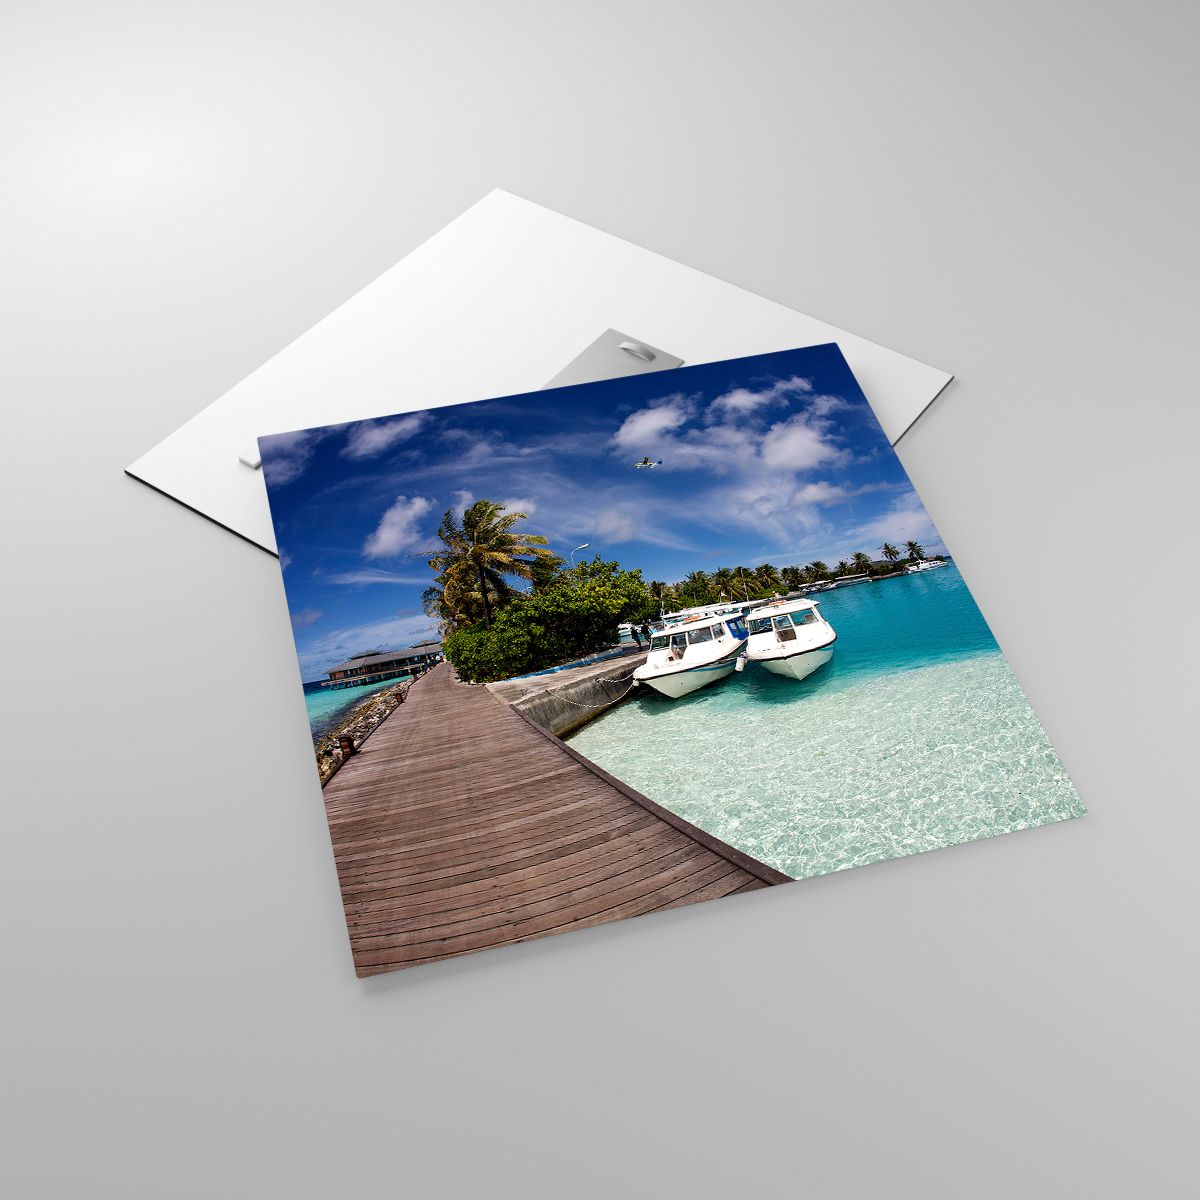 Glasbild Landschaft, Glasbild Paradies, Glasbild Meer, Glasbild Malediven, Glasbild Reisen